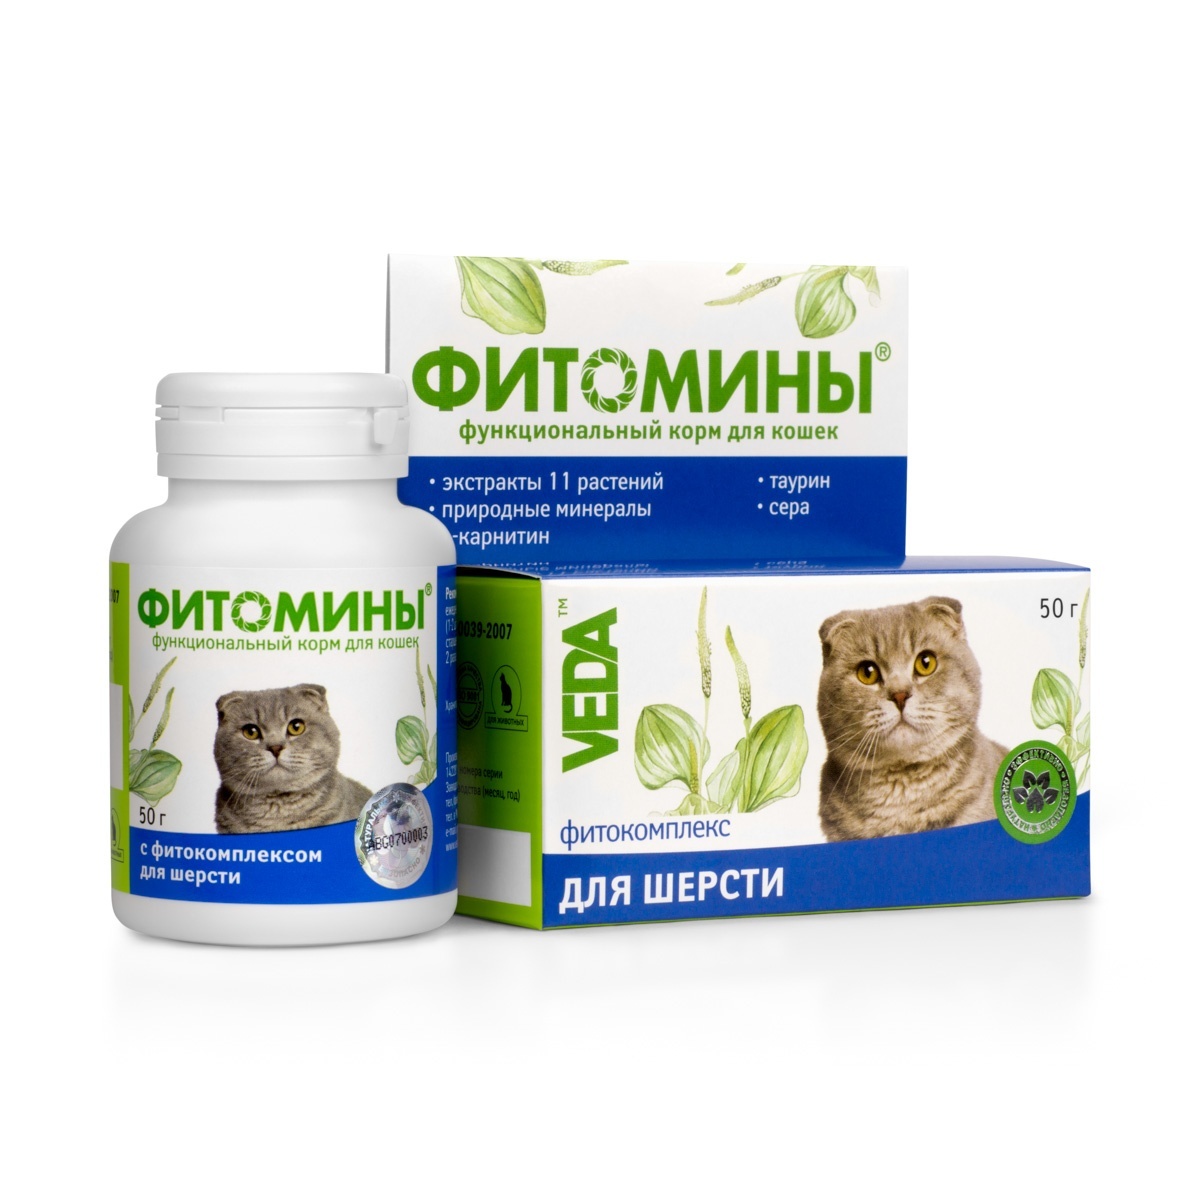 Веда Веда фитомины для шерсти кошек, 100 таб. (50 г) подкормка для кроликов веда фитомины 50г